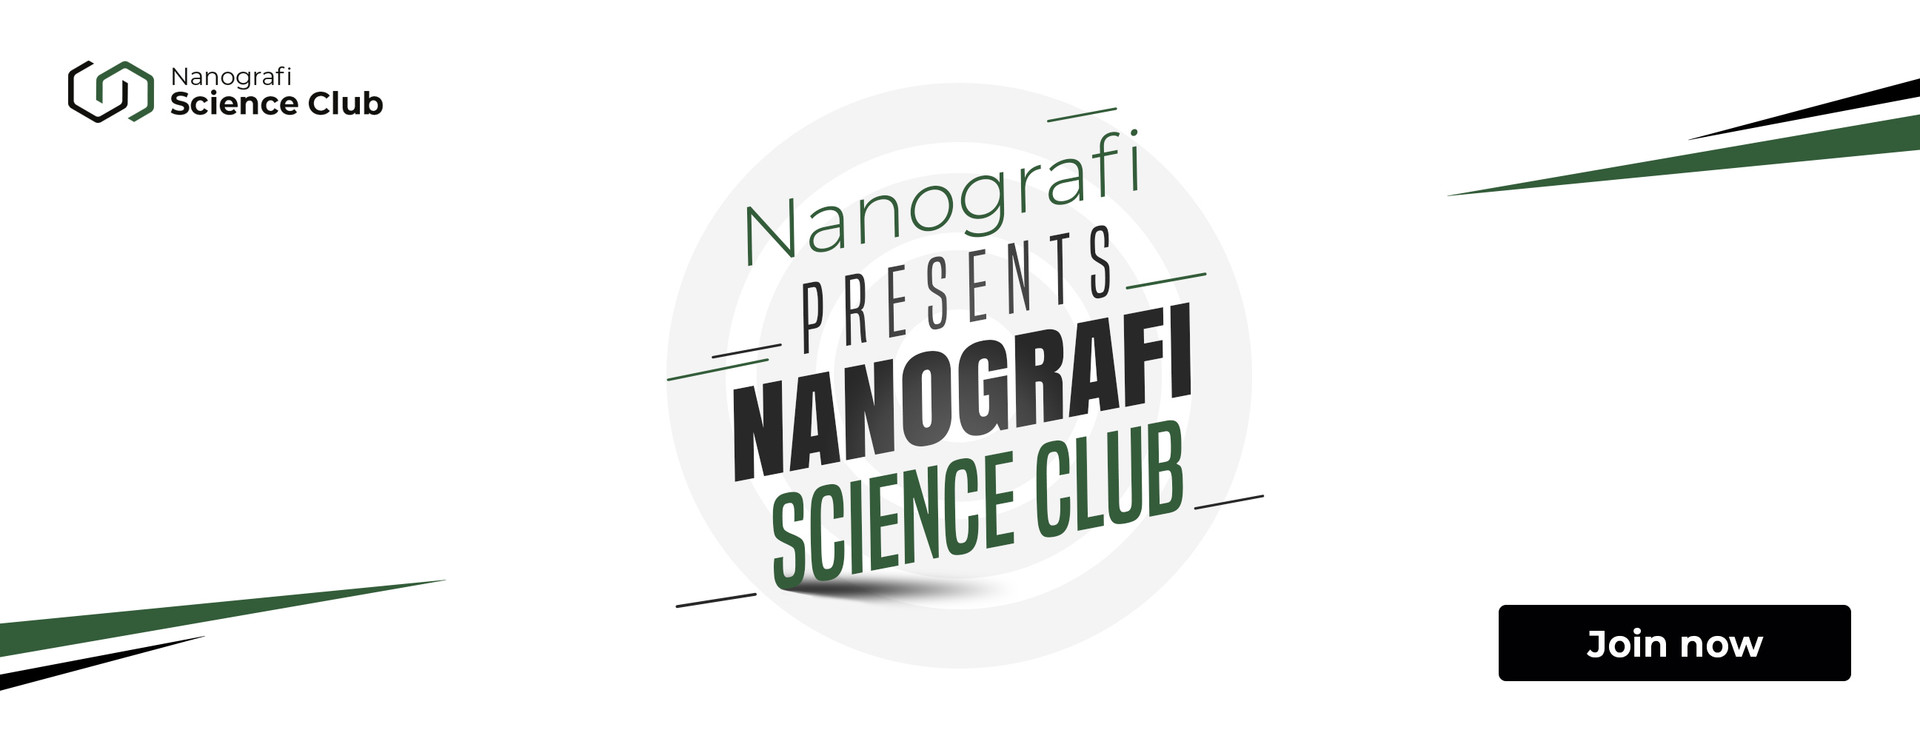 Nanografi Science Club